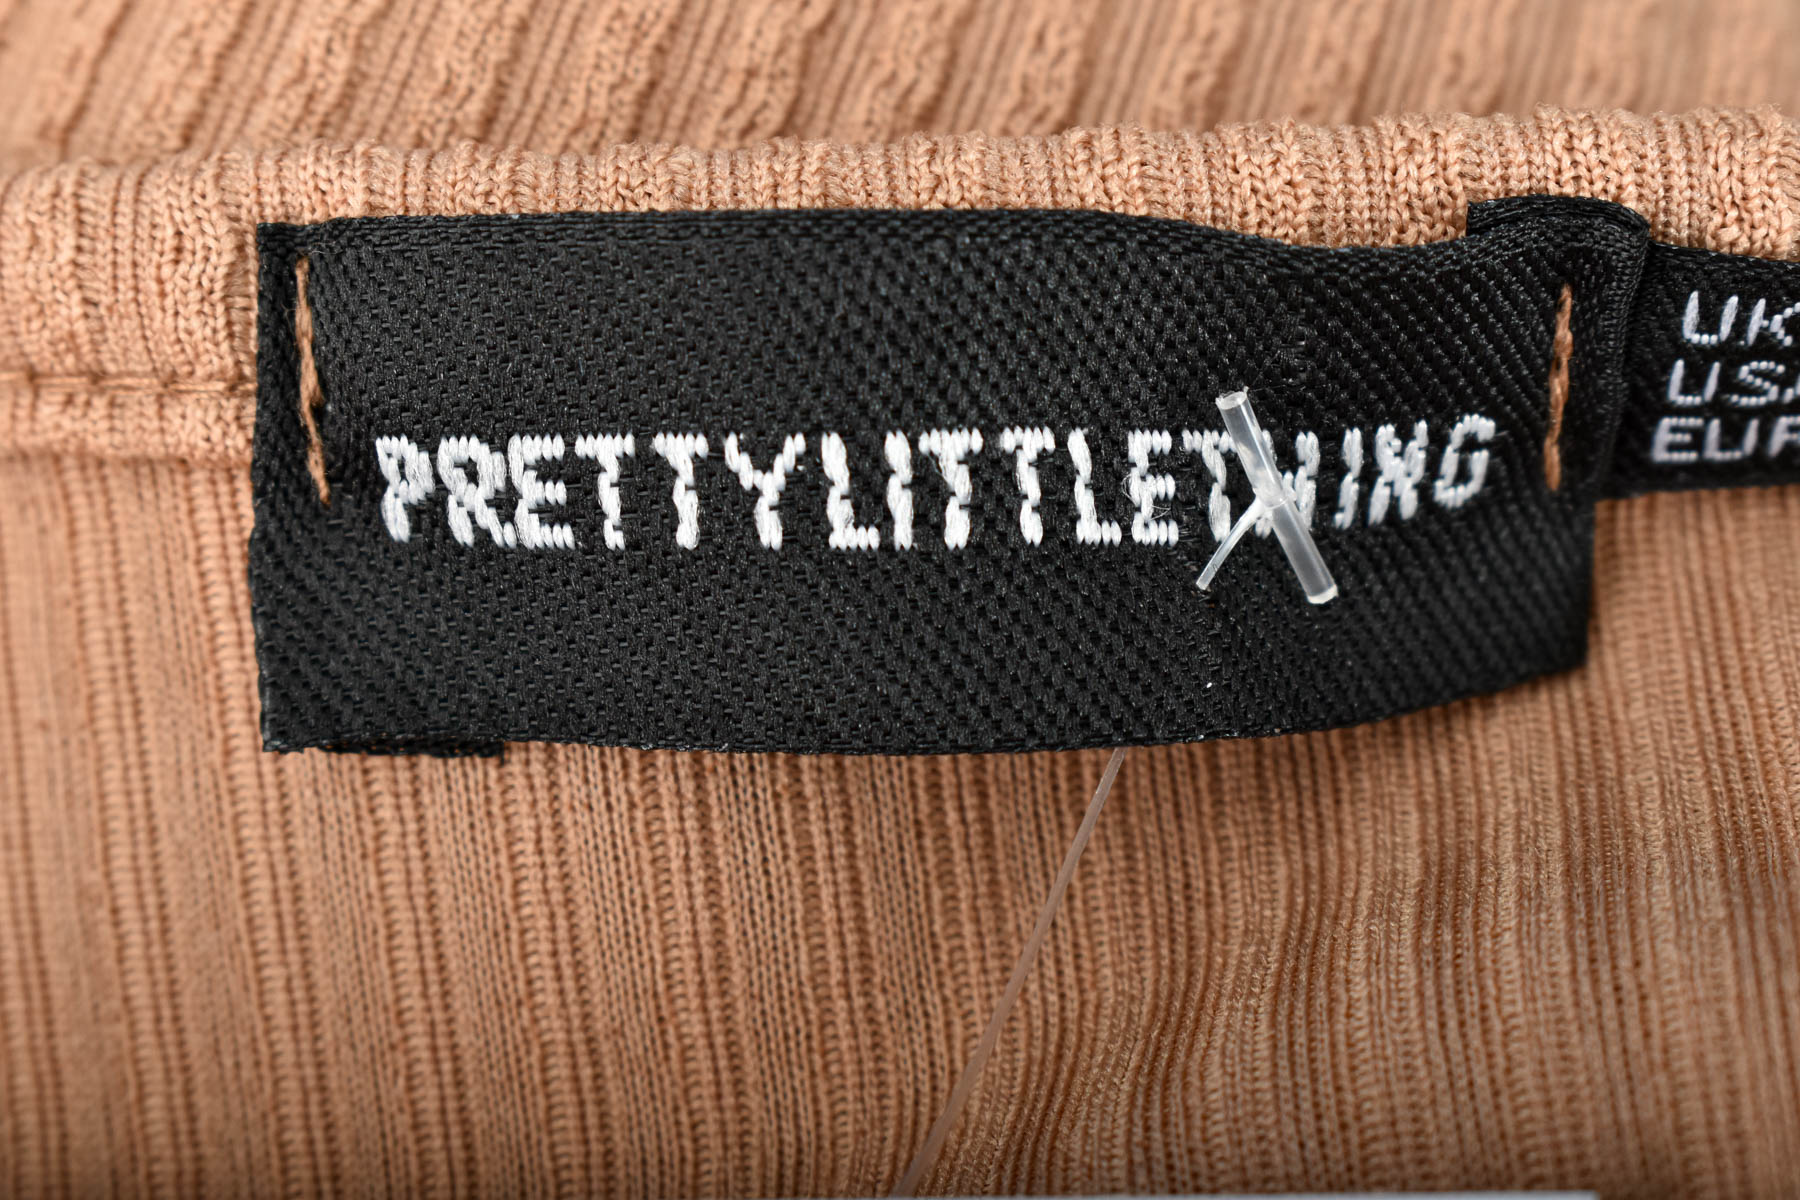 Dress - PRETTYLITTLETHING - 2